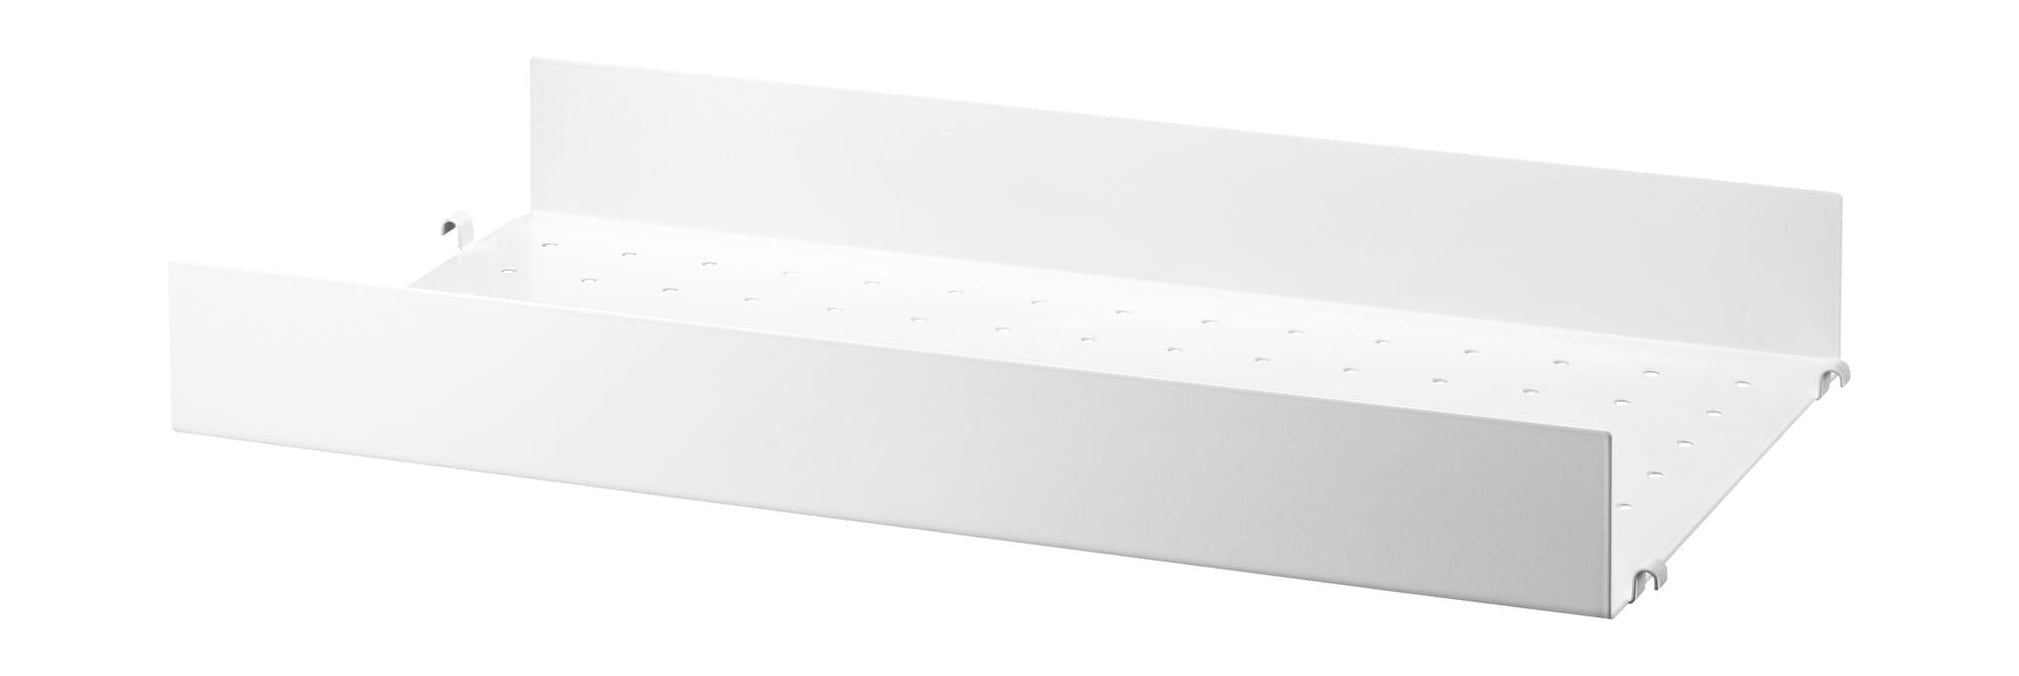 String Furniture String System Metal Shelf With High Edge 30x58 Cm, White